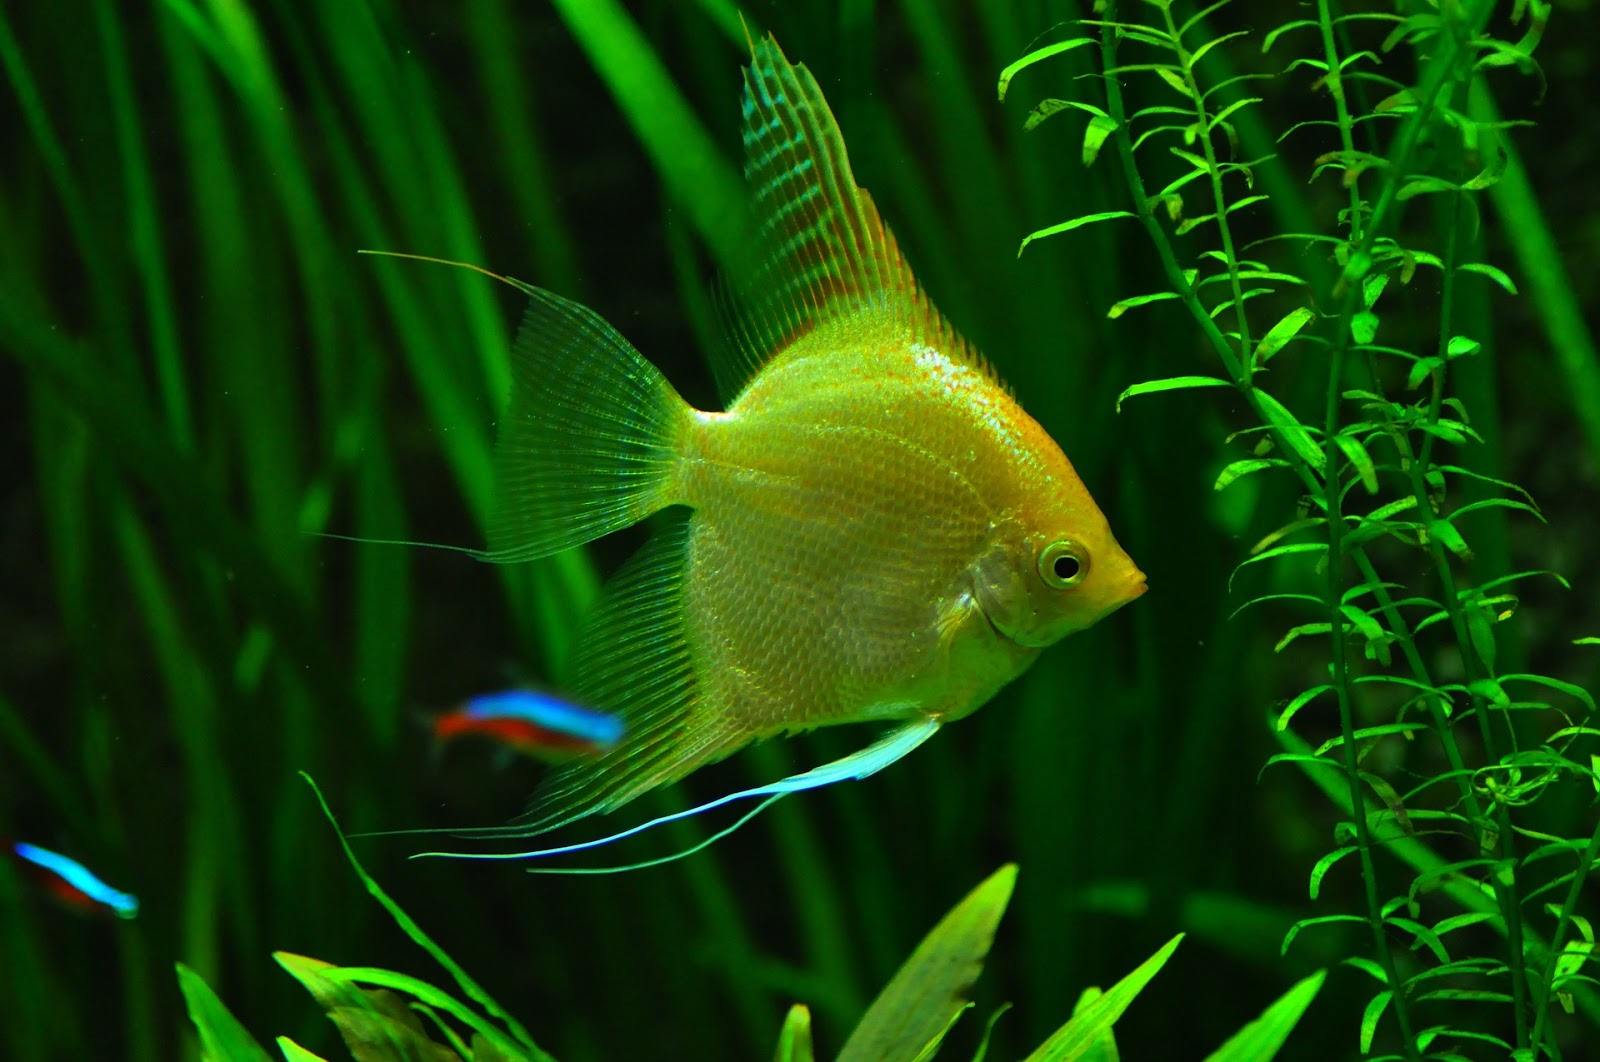 A fish swimming through plants